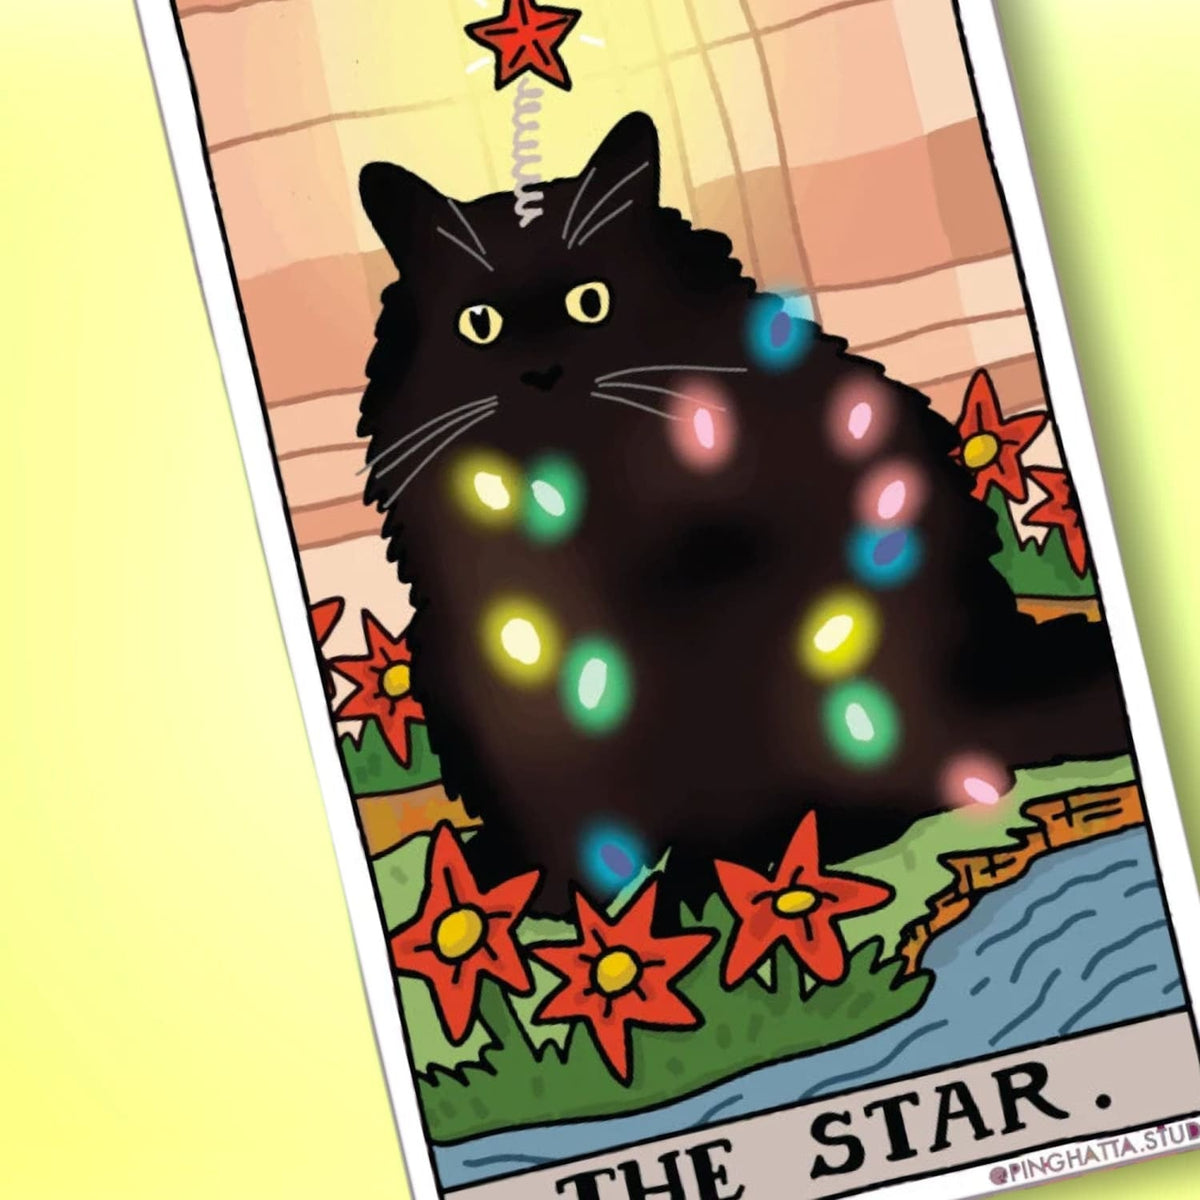 Ping Hatta Sticker - Tarot Cat The Star 0822 - Boyfriend